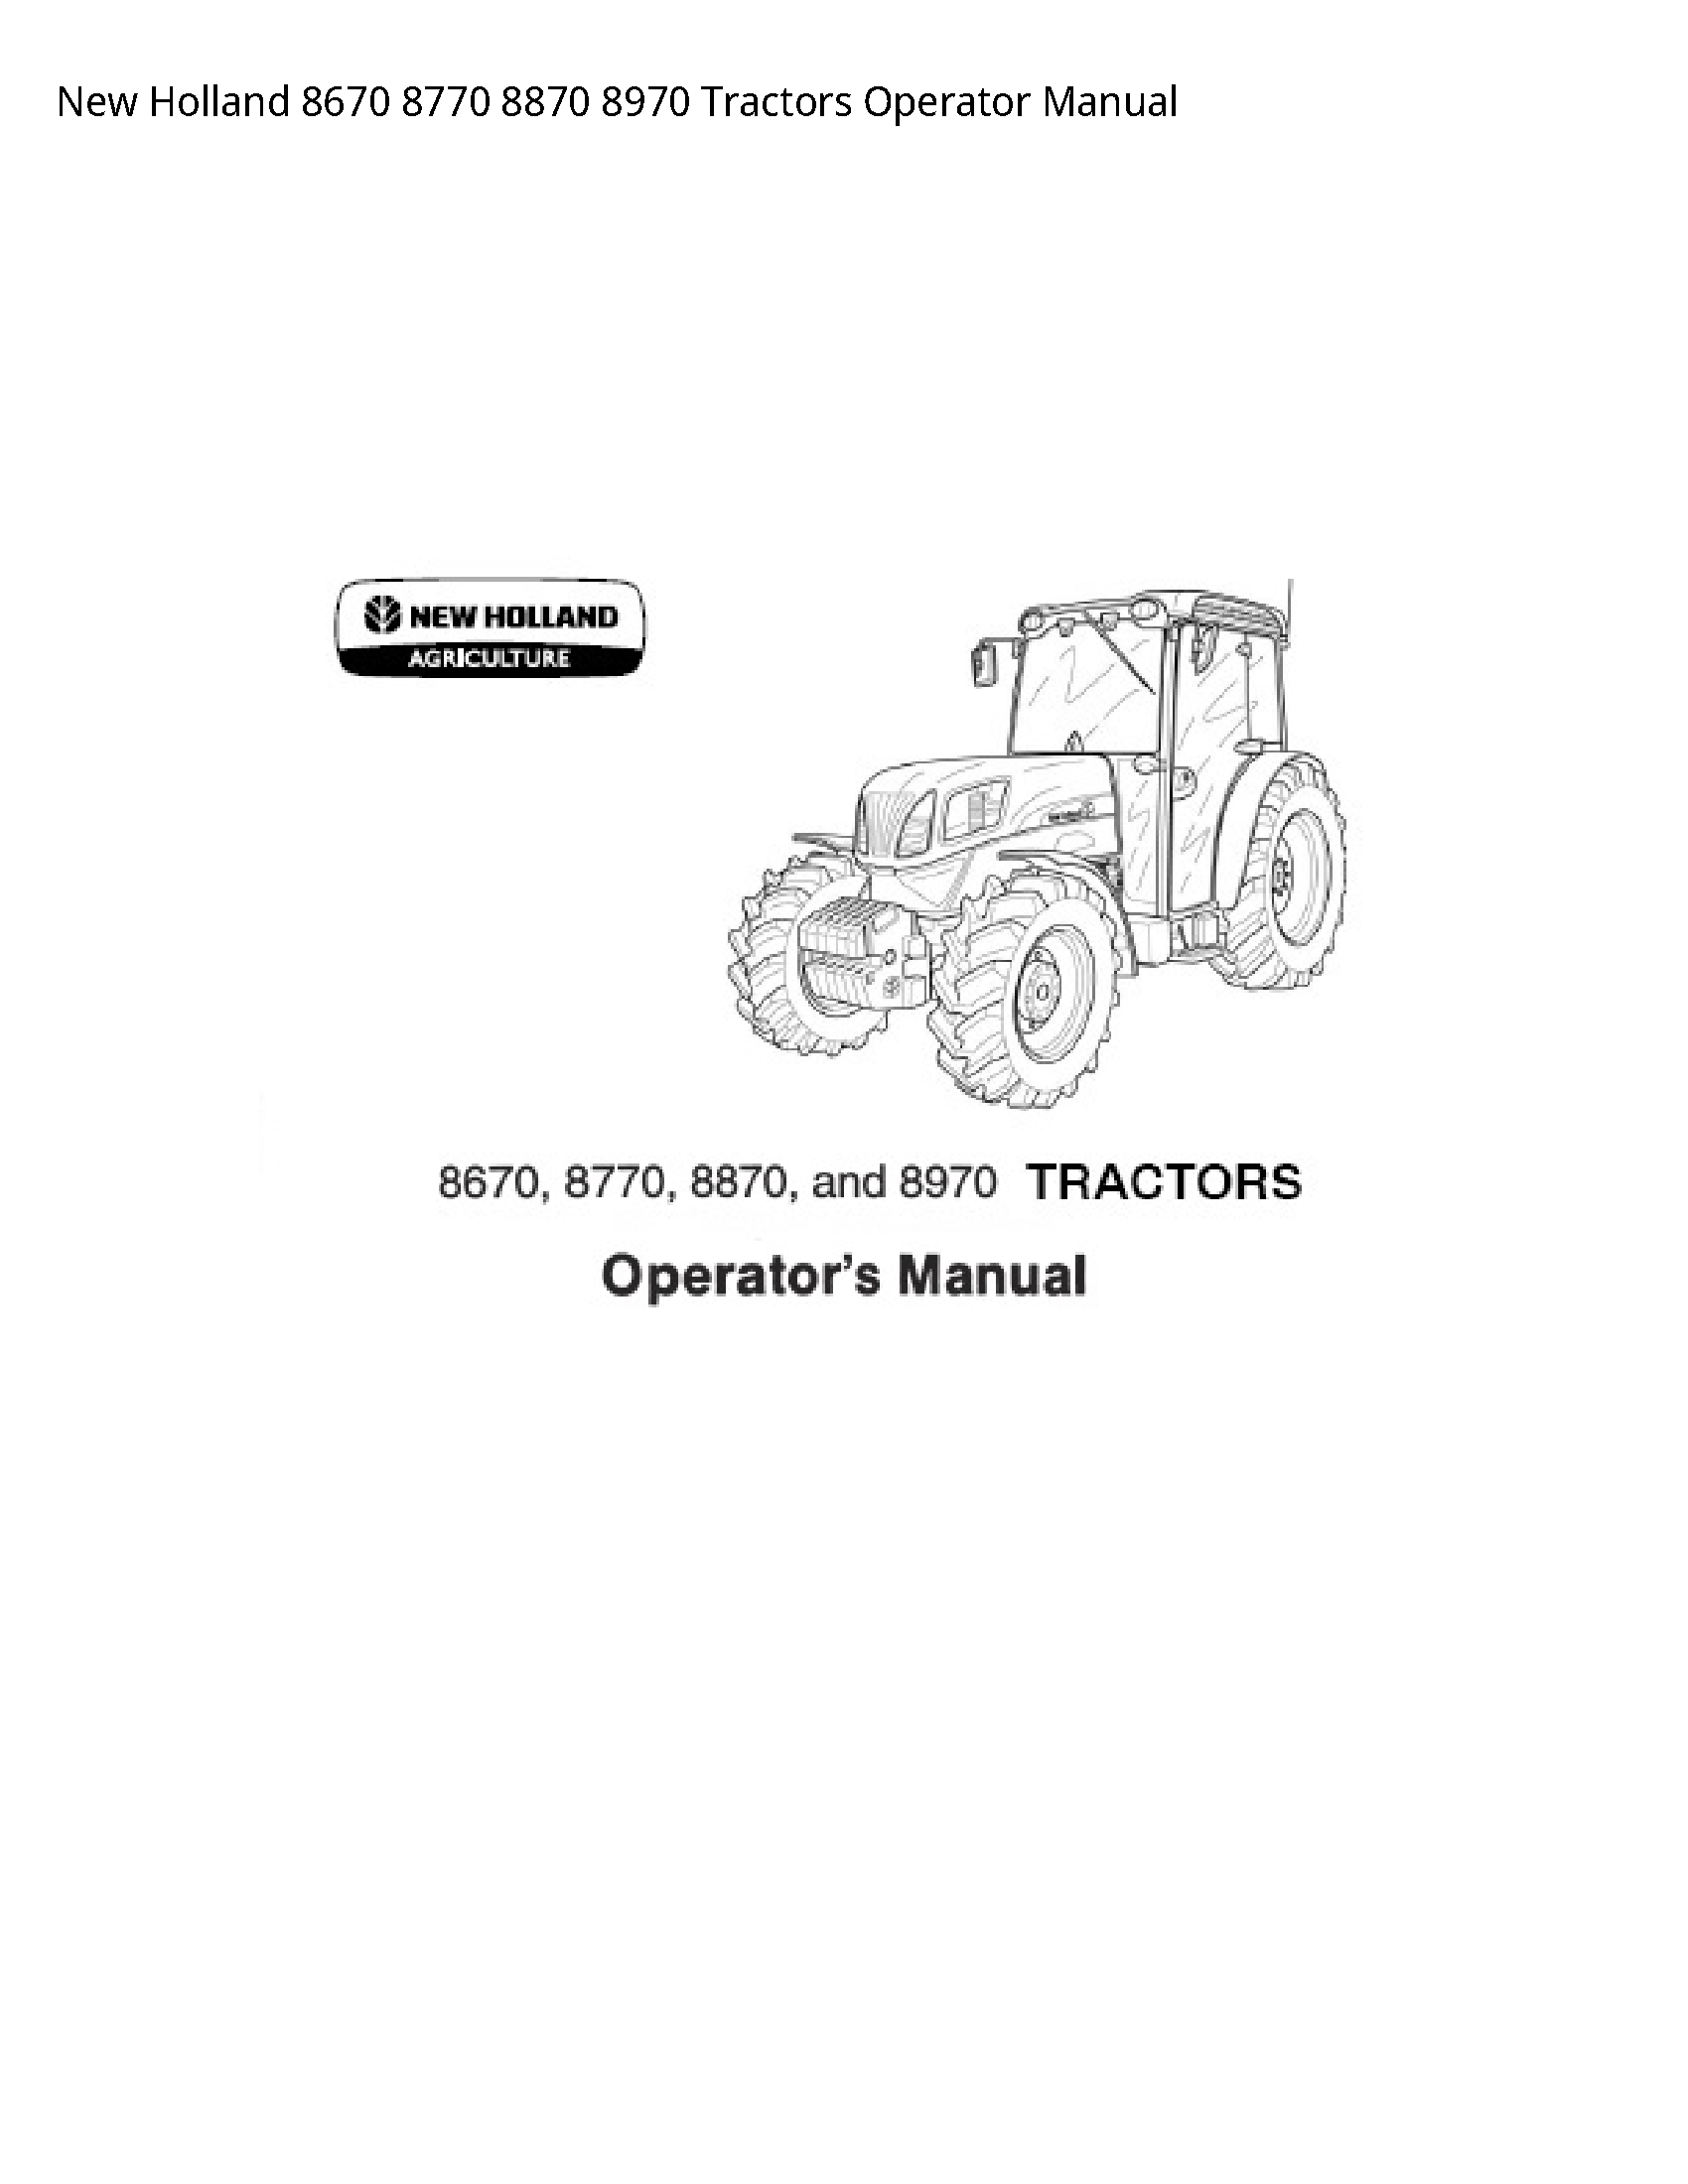 New Holland 8670 Tractors Operator manual